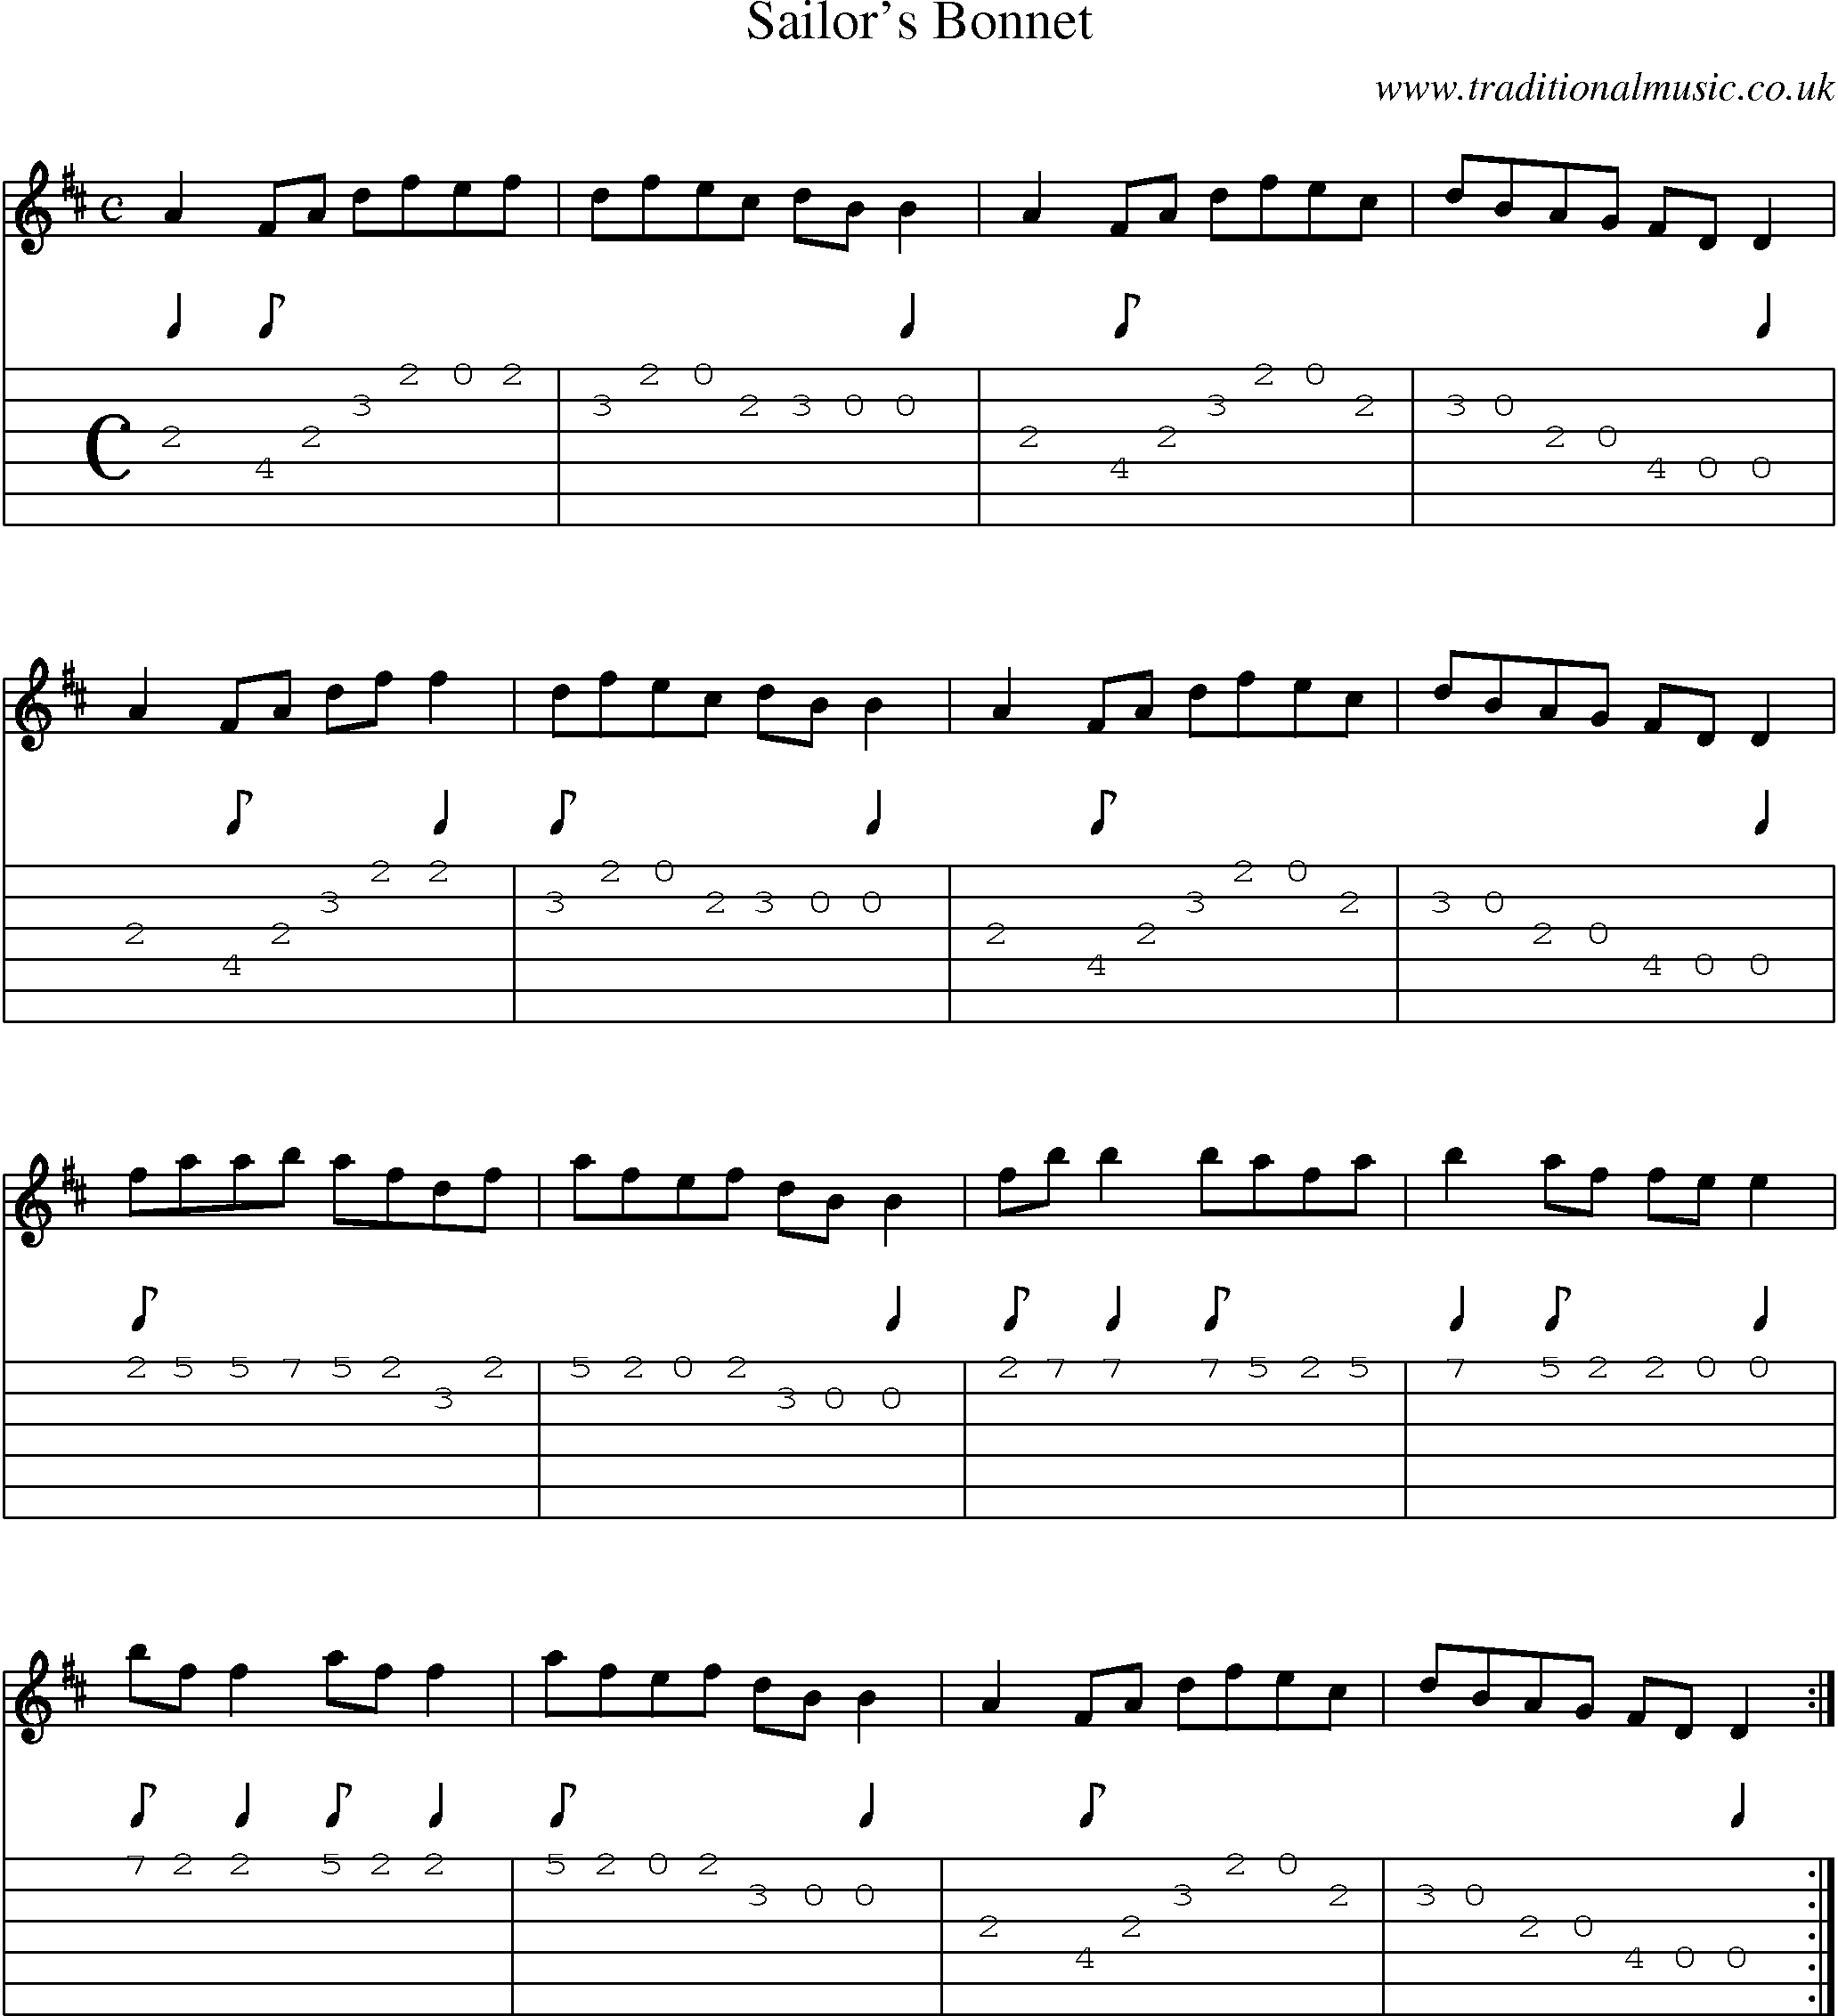 Music Score and Guitar Tabs for Sailors Bonnet